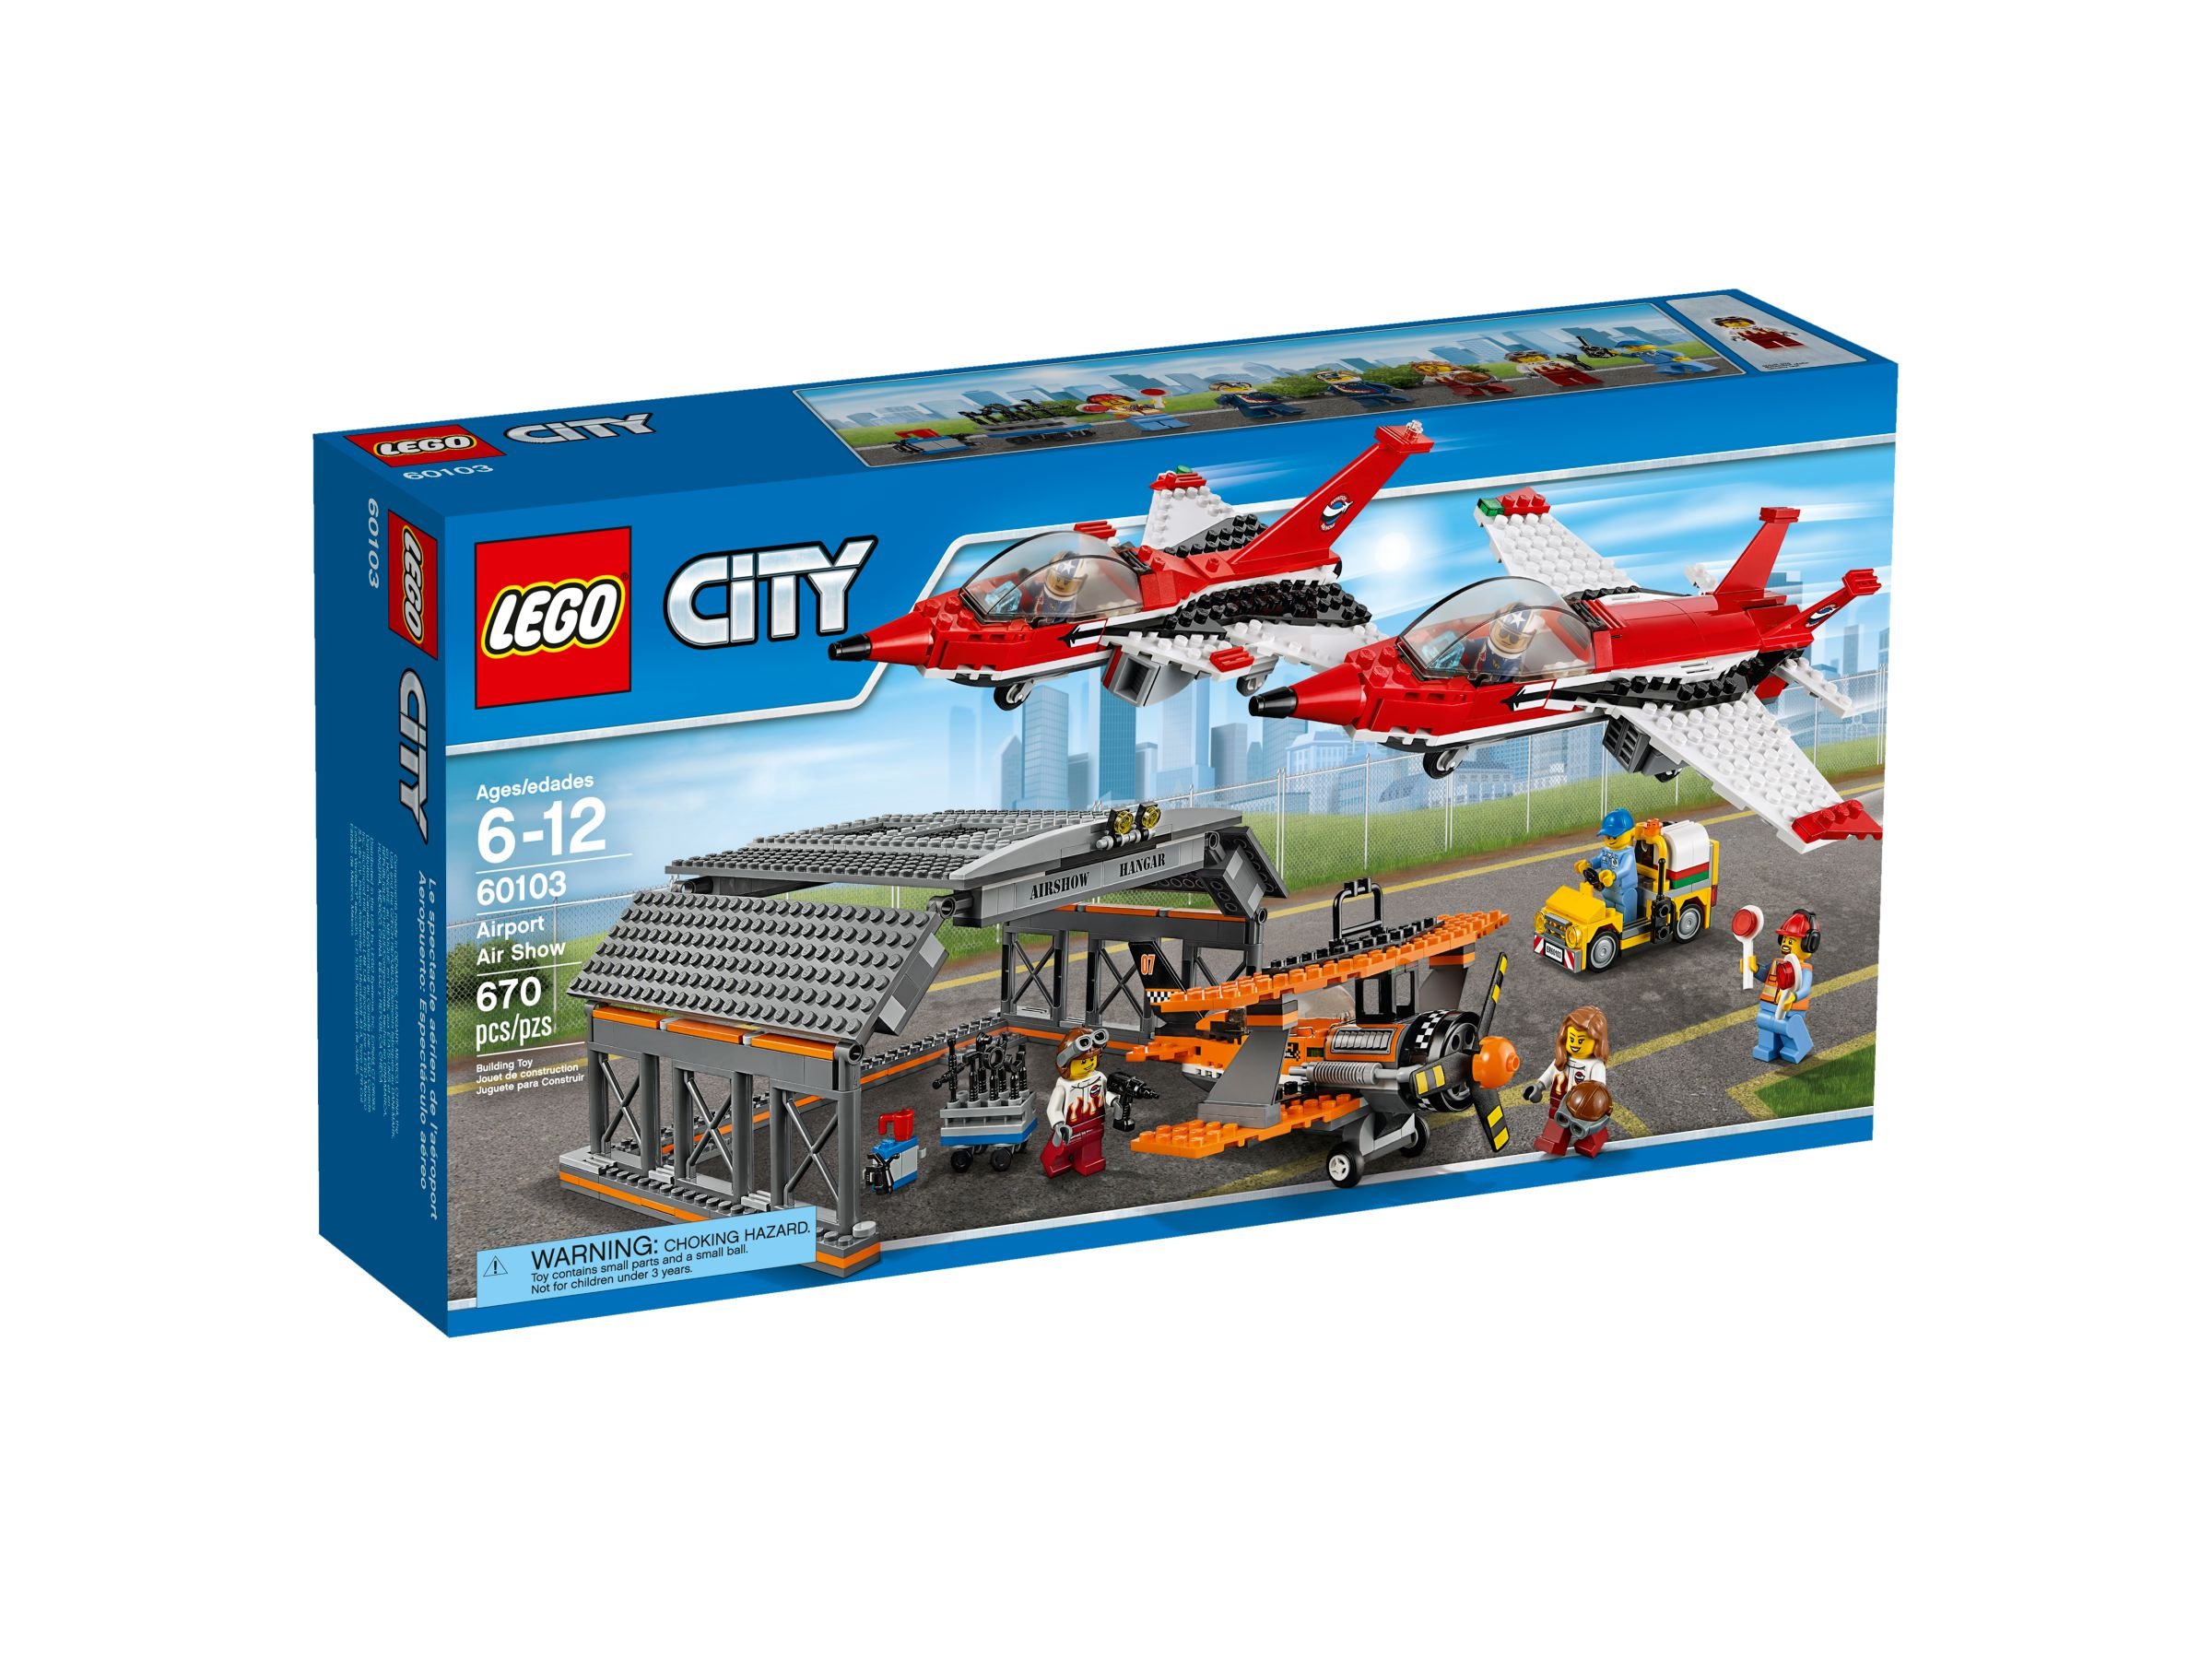 LEGO City 60103 Große Flugschau LEGO_60103_alt1.jpg